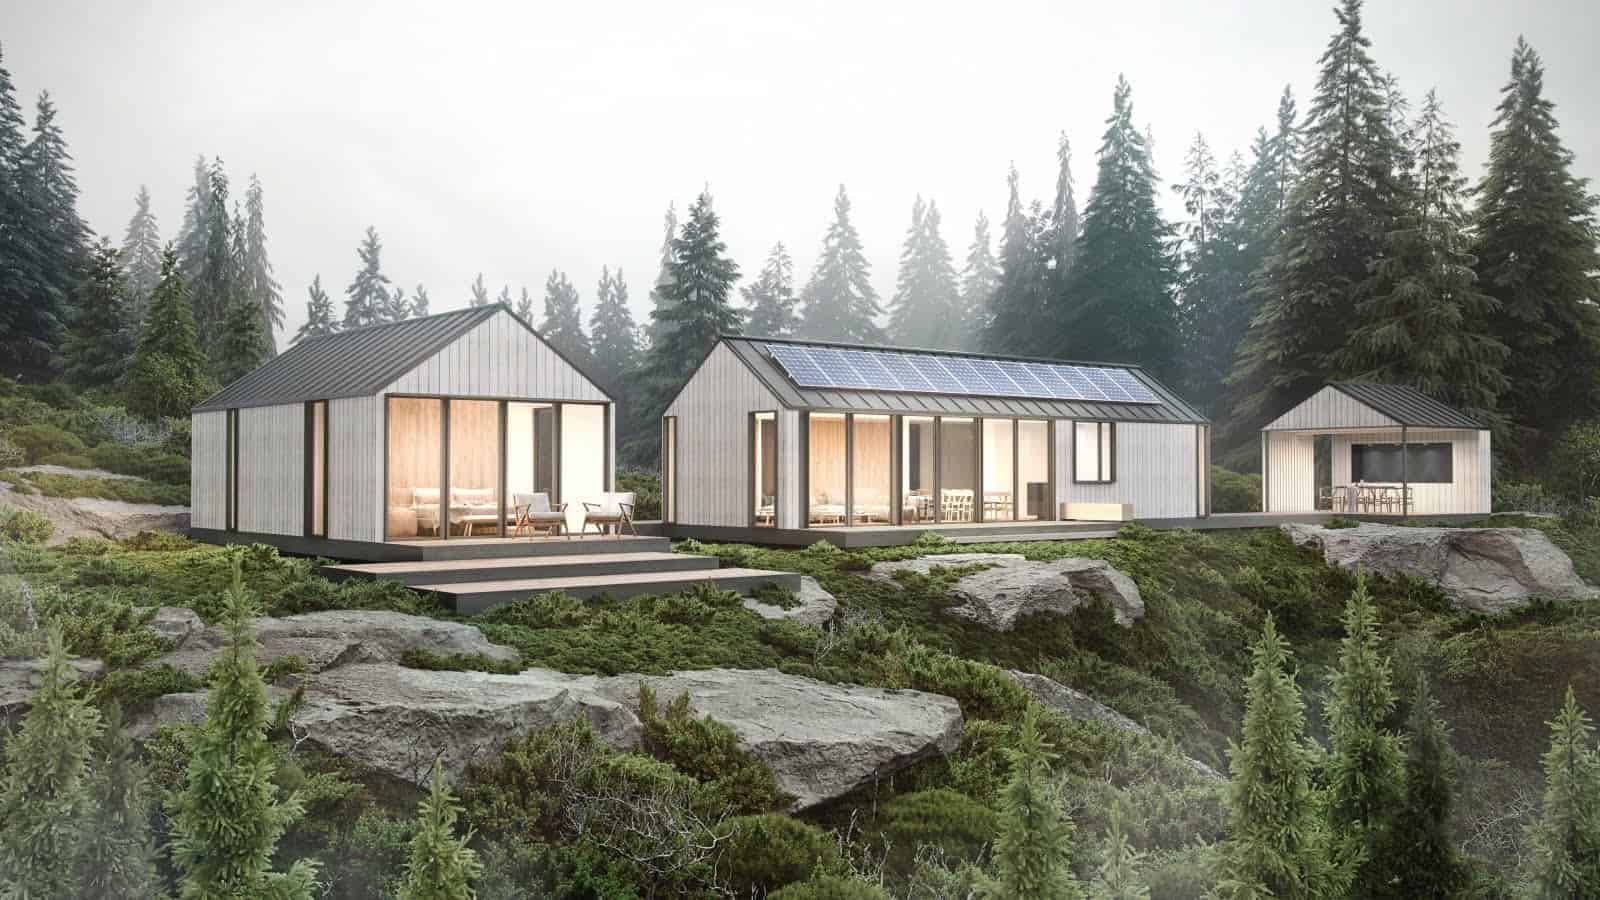 NODE Sequoia modern prefab home model - view of exterior.